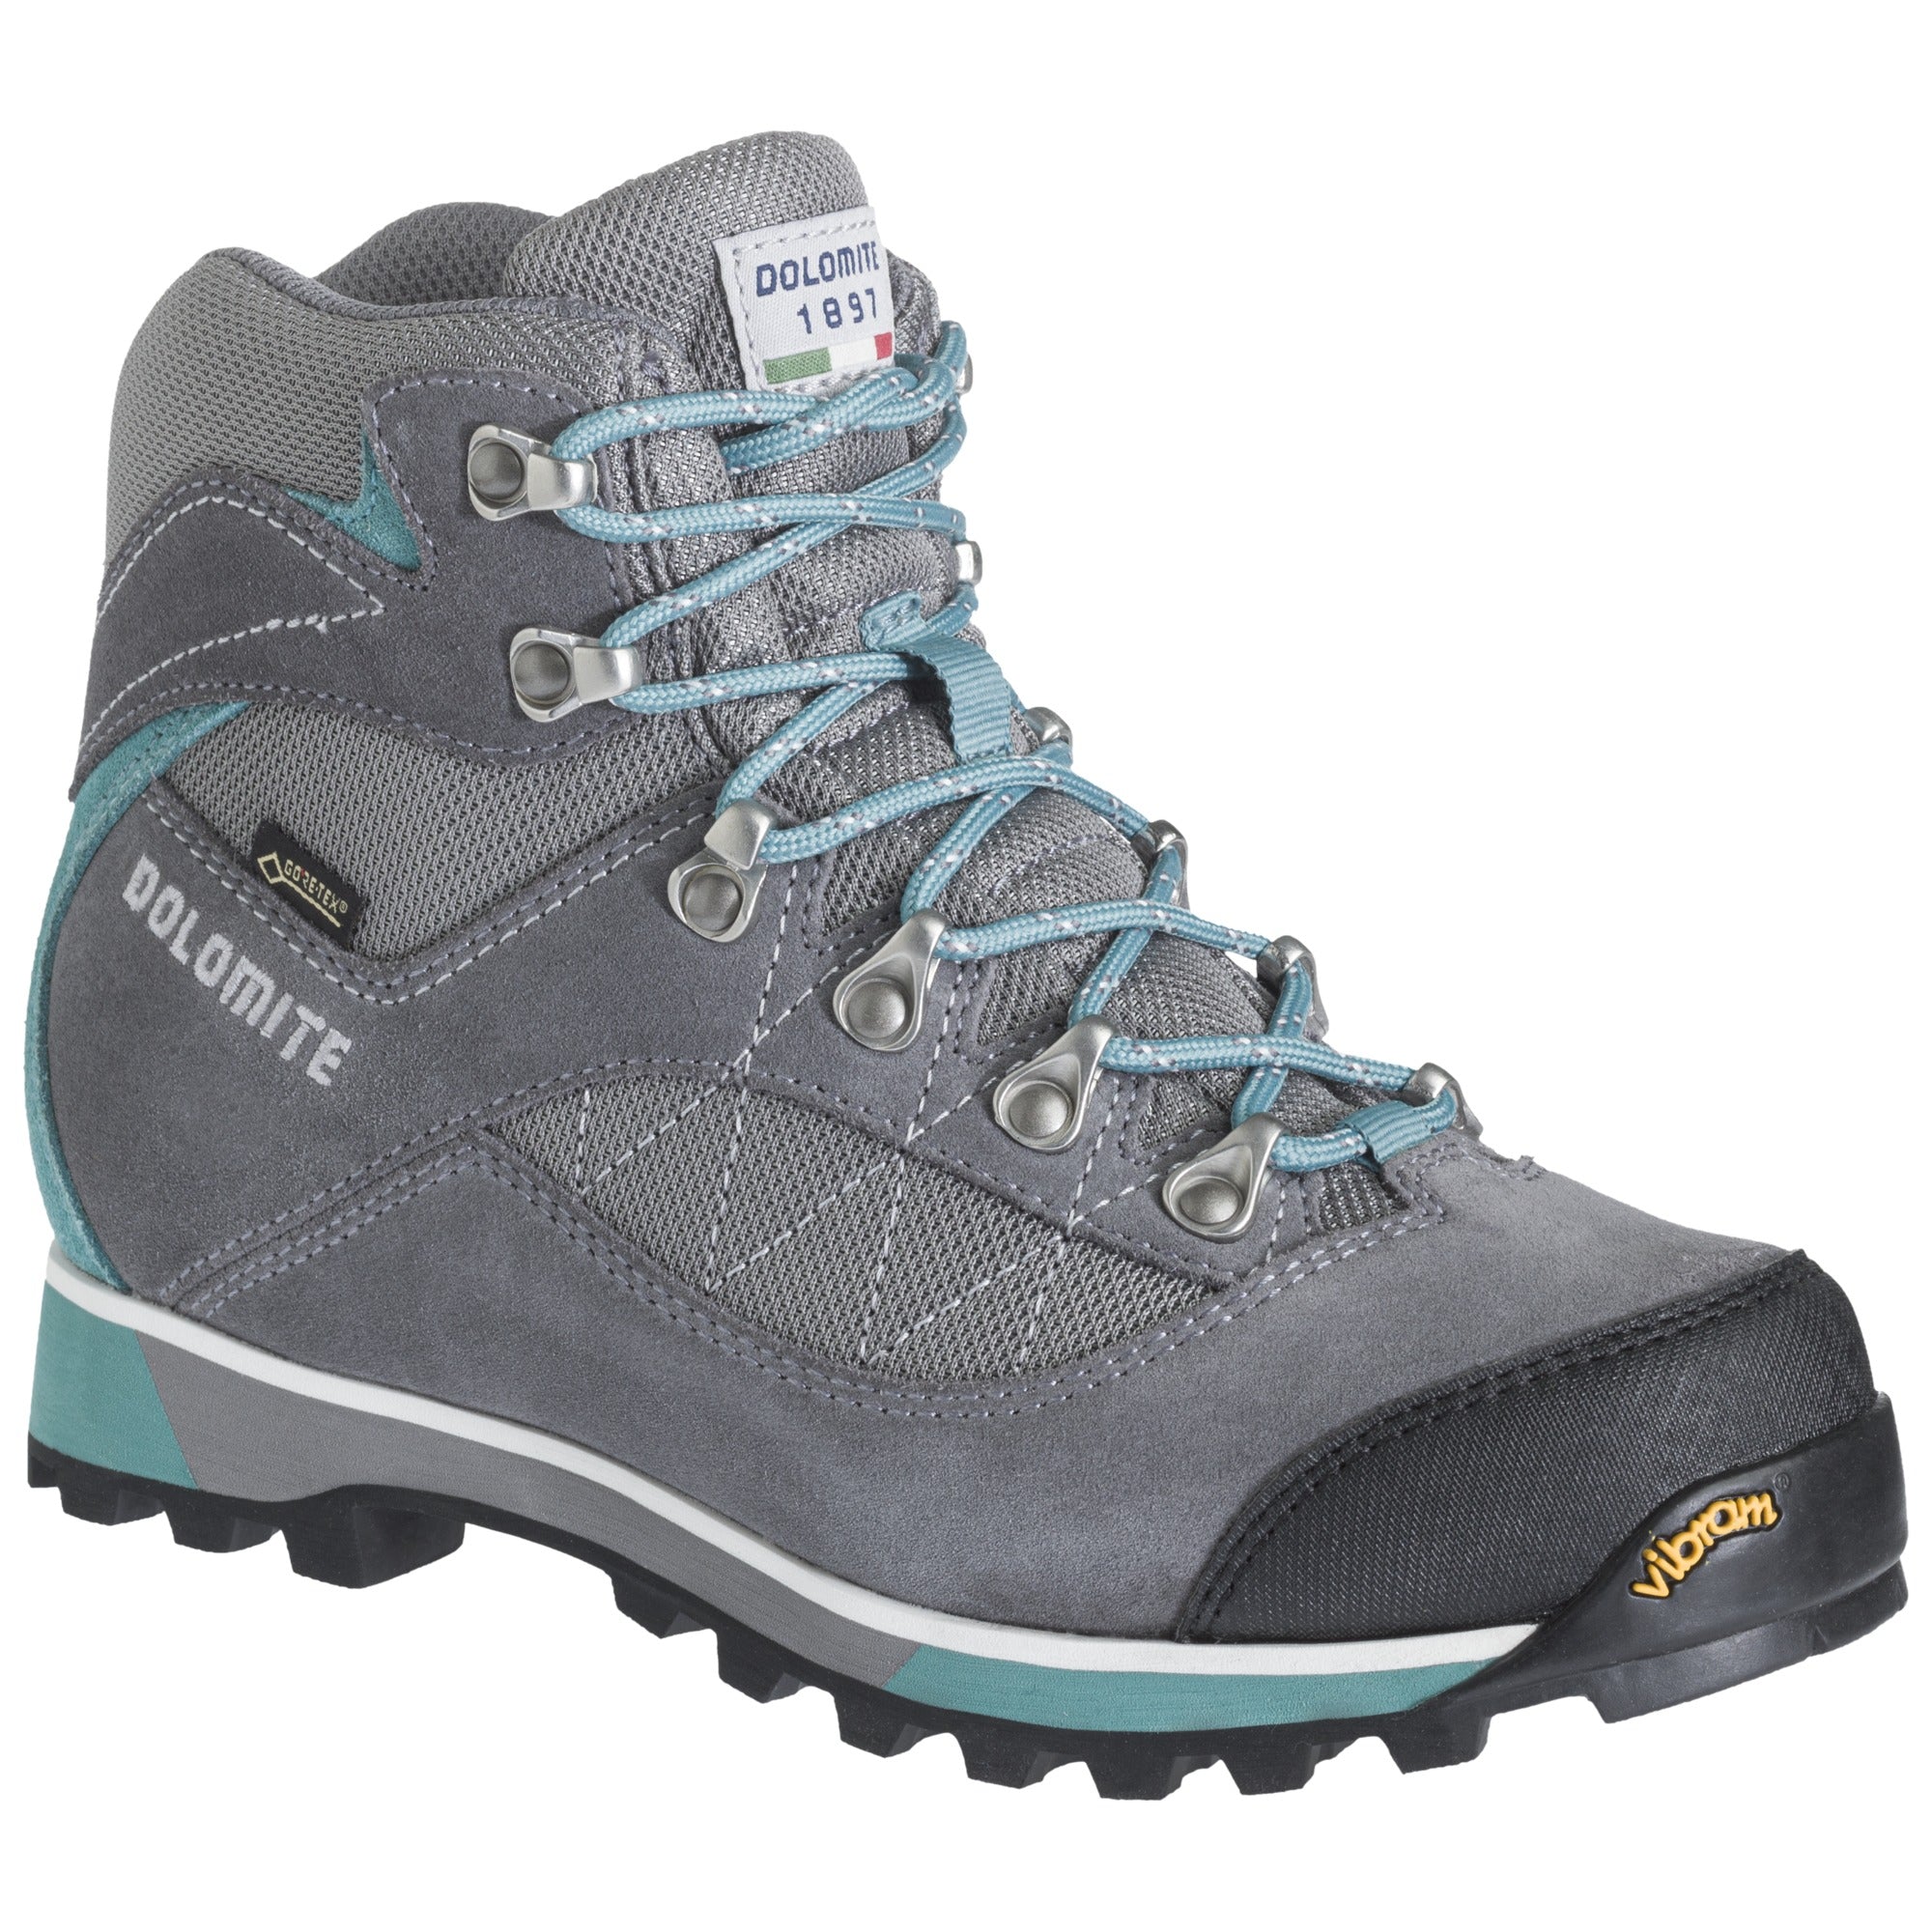 Dolomite Zernez GTX Mens Walking Boot - Gunmetal Grey / Dusty Teal Green